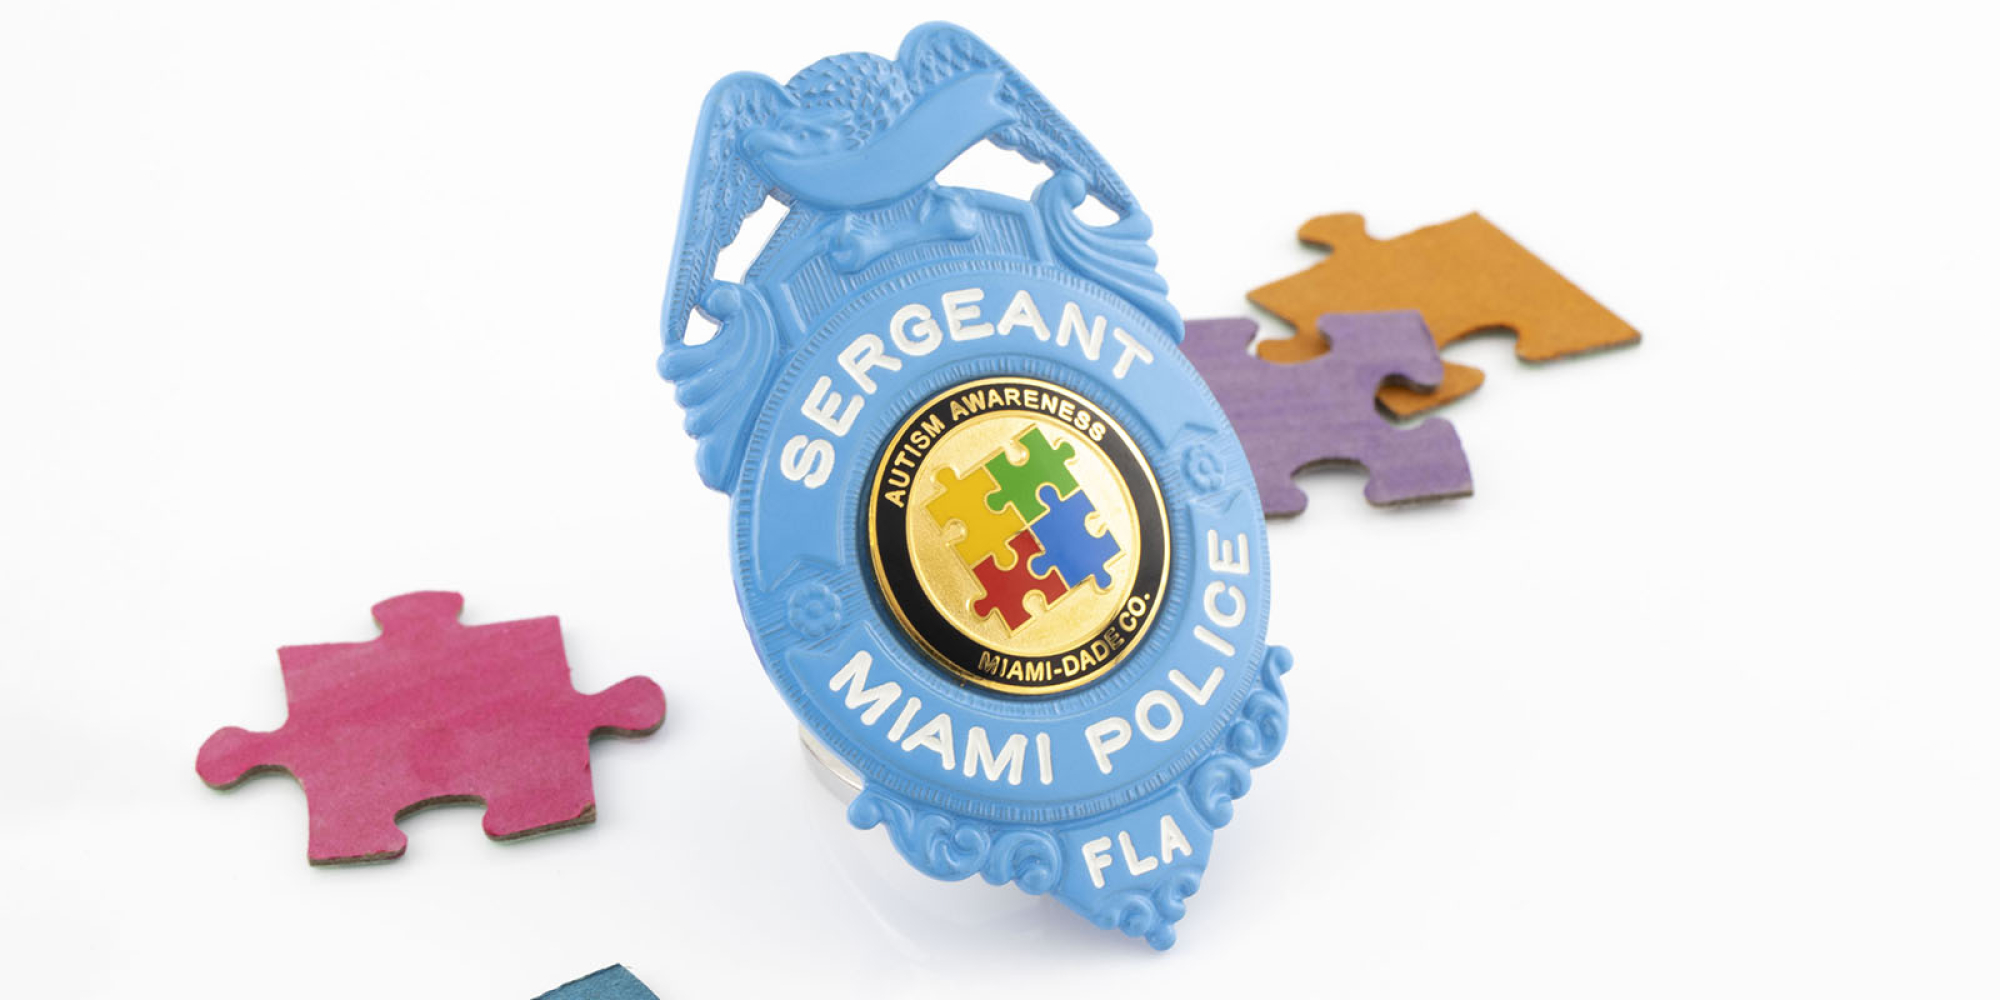 Blue autism badge for miami police